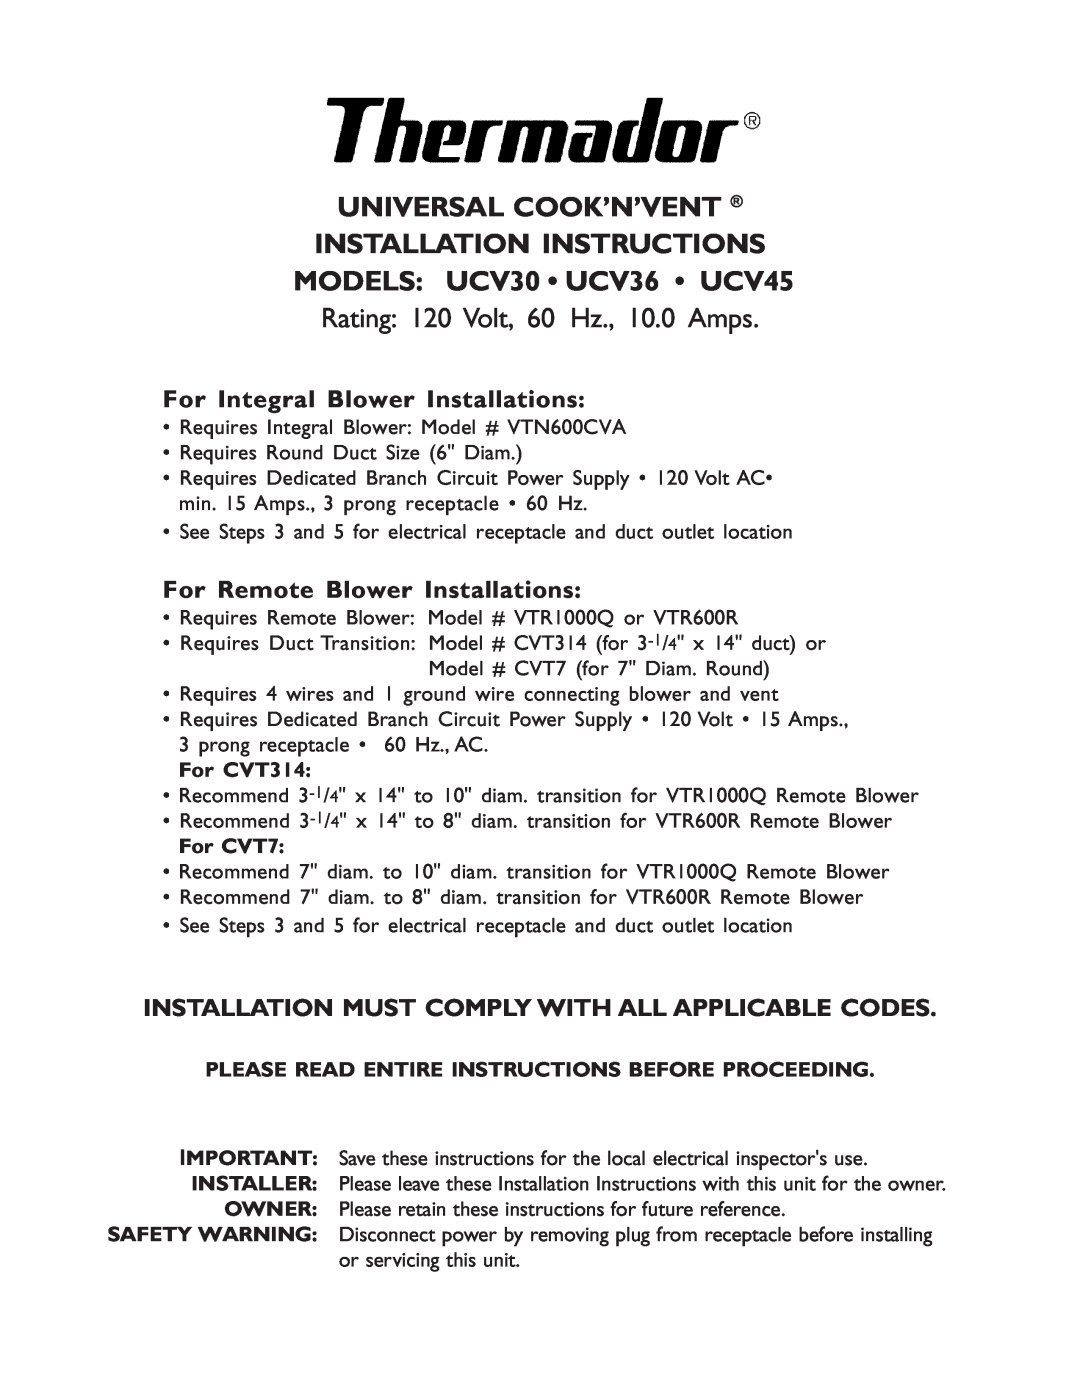 Thermador installation instructions Universal Cook’N’Vent Installation Instructions, MODELS UCV30 UCV36 UCV45, For CVT7 